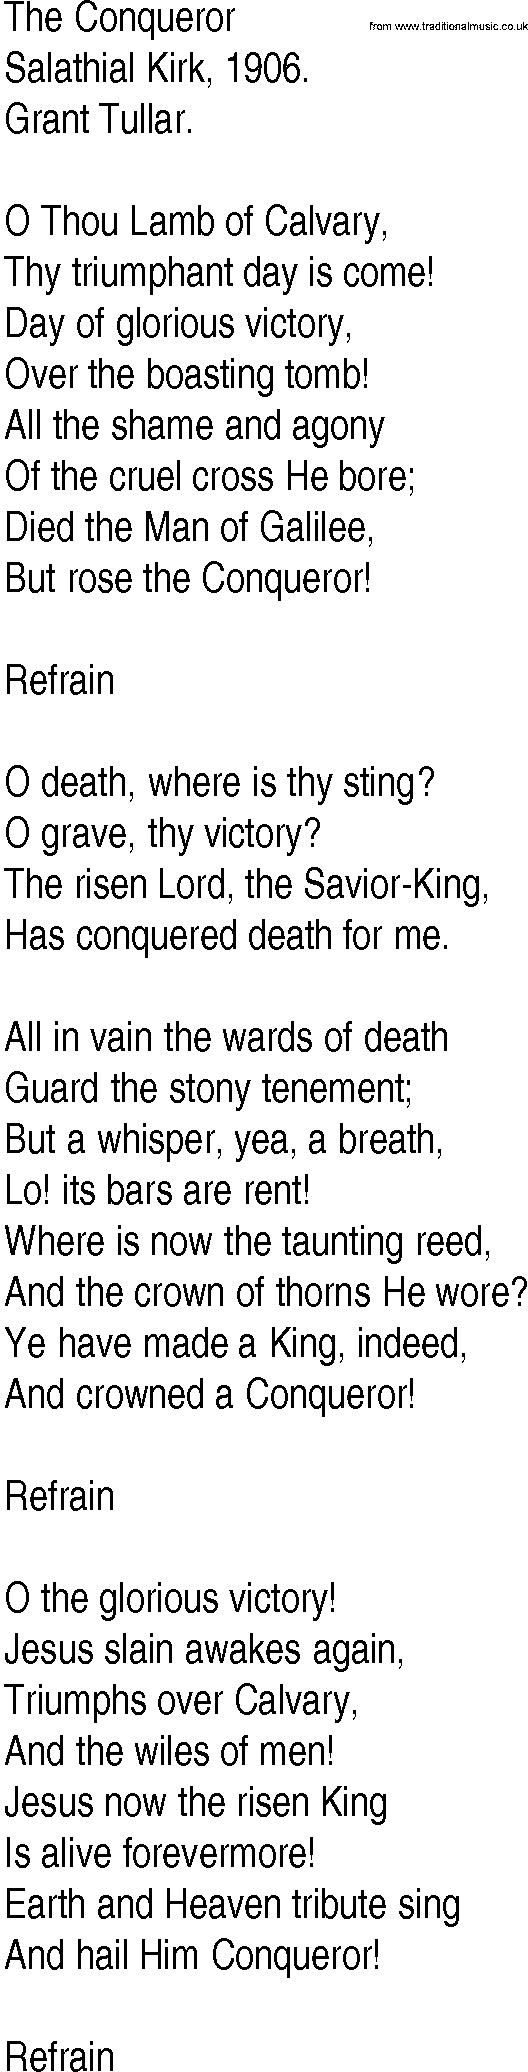 Hymn and Gospel Song: The Conqueror by Salathial Kirk lyrics